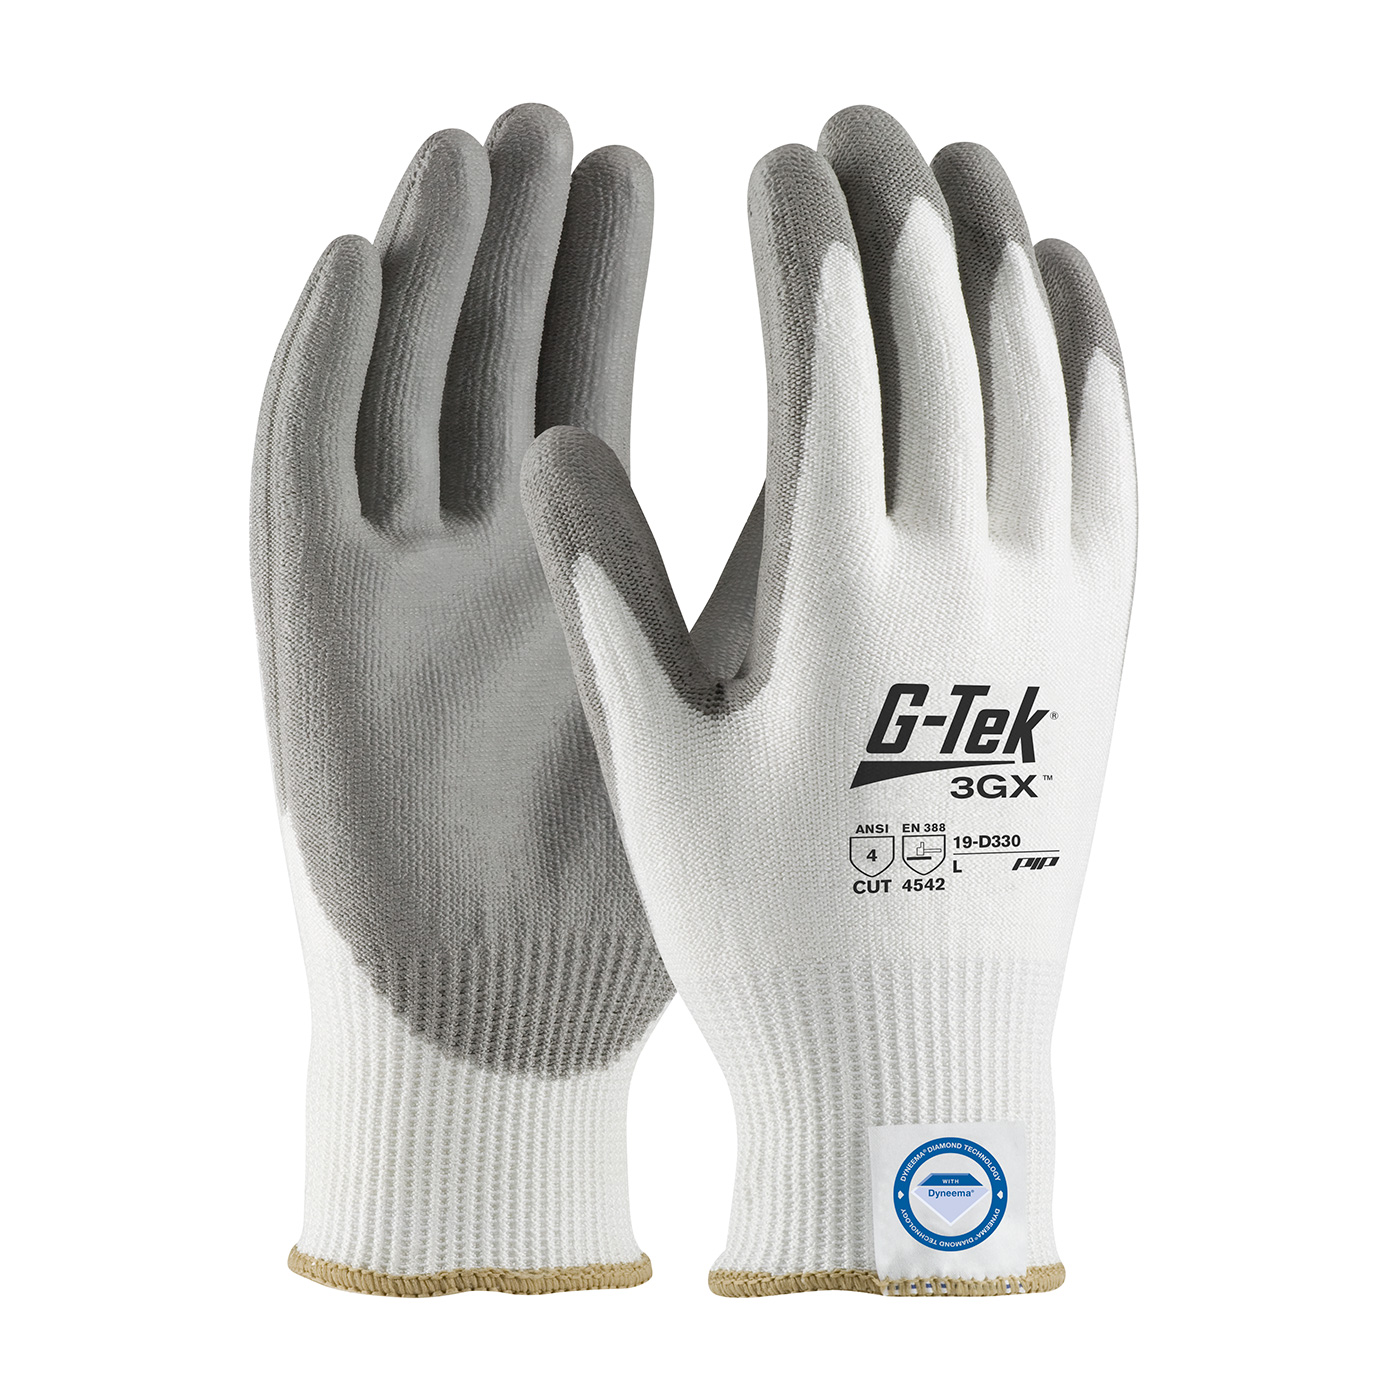 PIP 19-D330/M G-Tek 3GX Seamless Knit Dyneema Diamond Blended Glove with Polyurethane Coated Smooth Grip on Palm & Fingers - Medium PID-19 D330 M